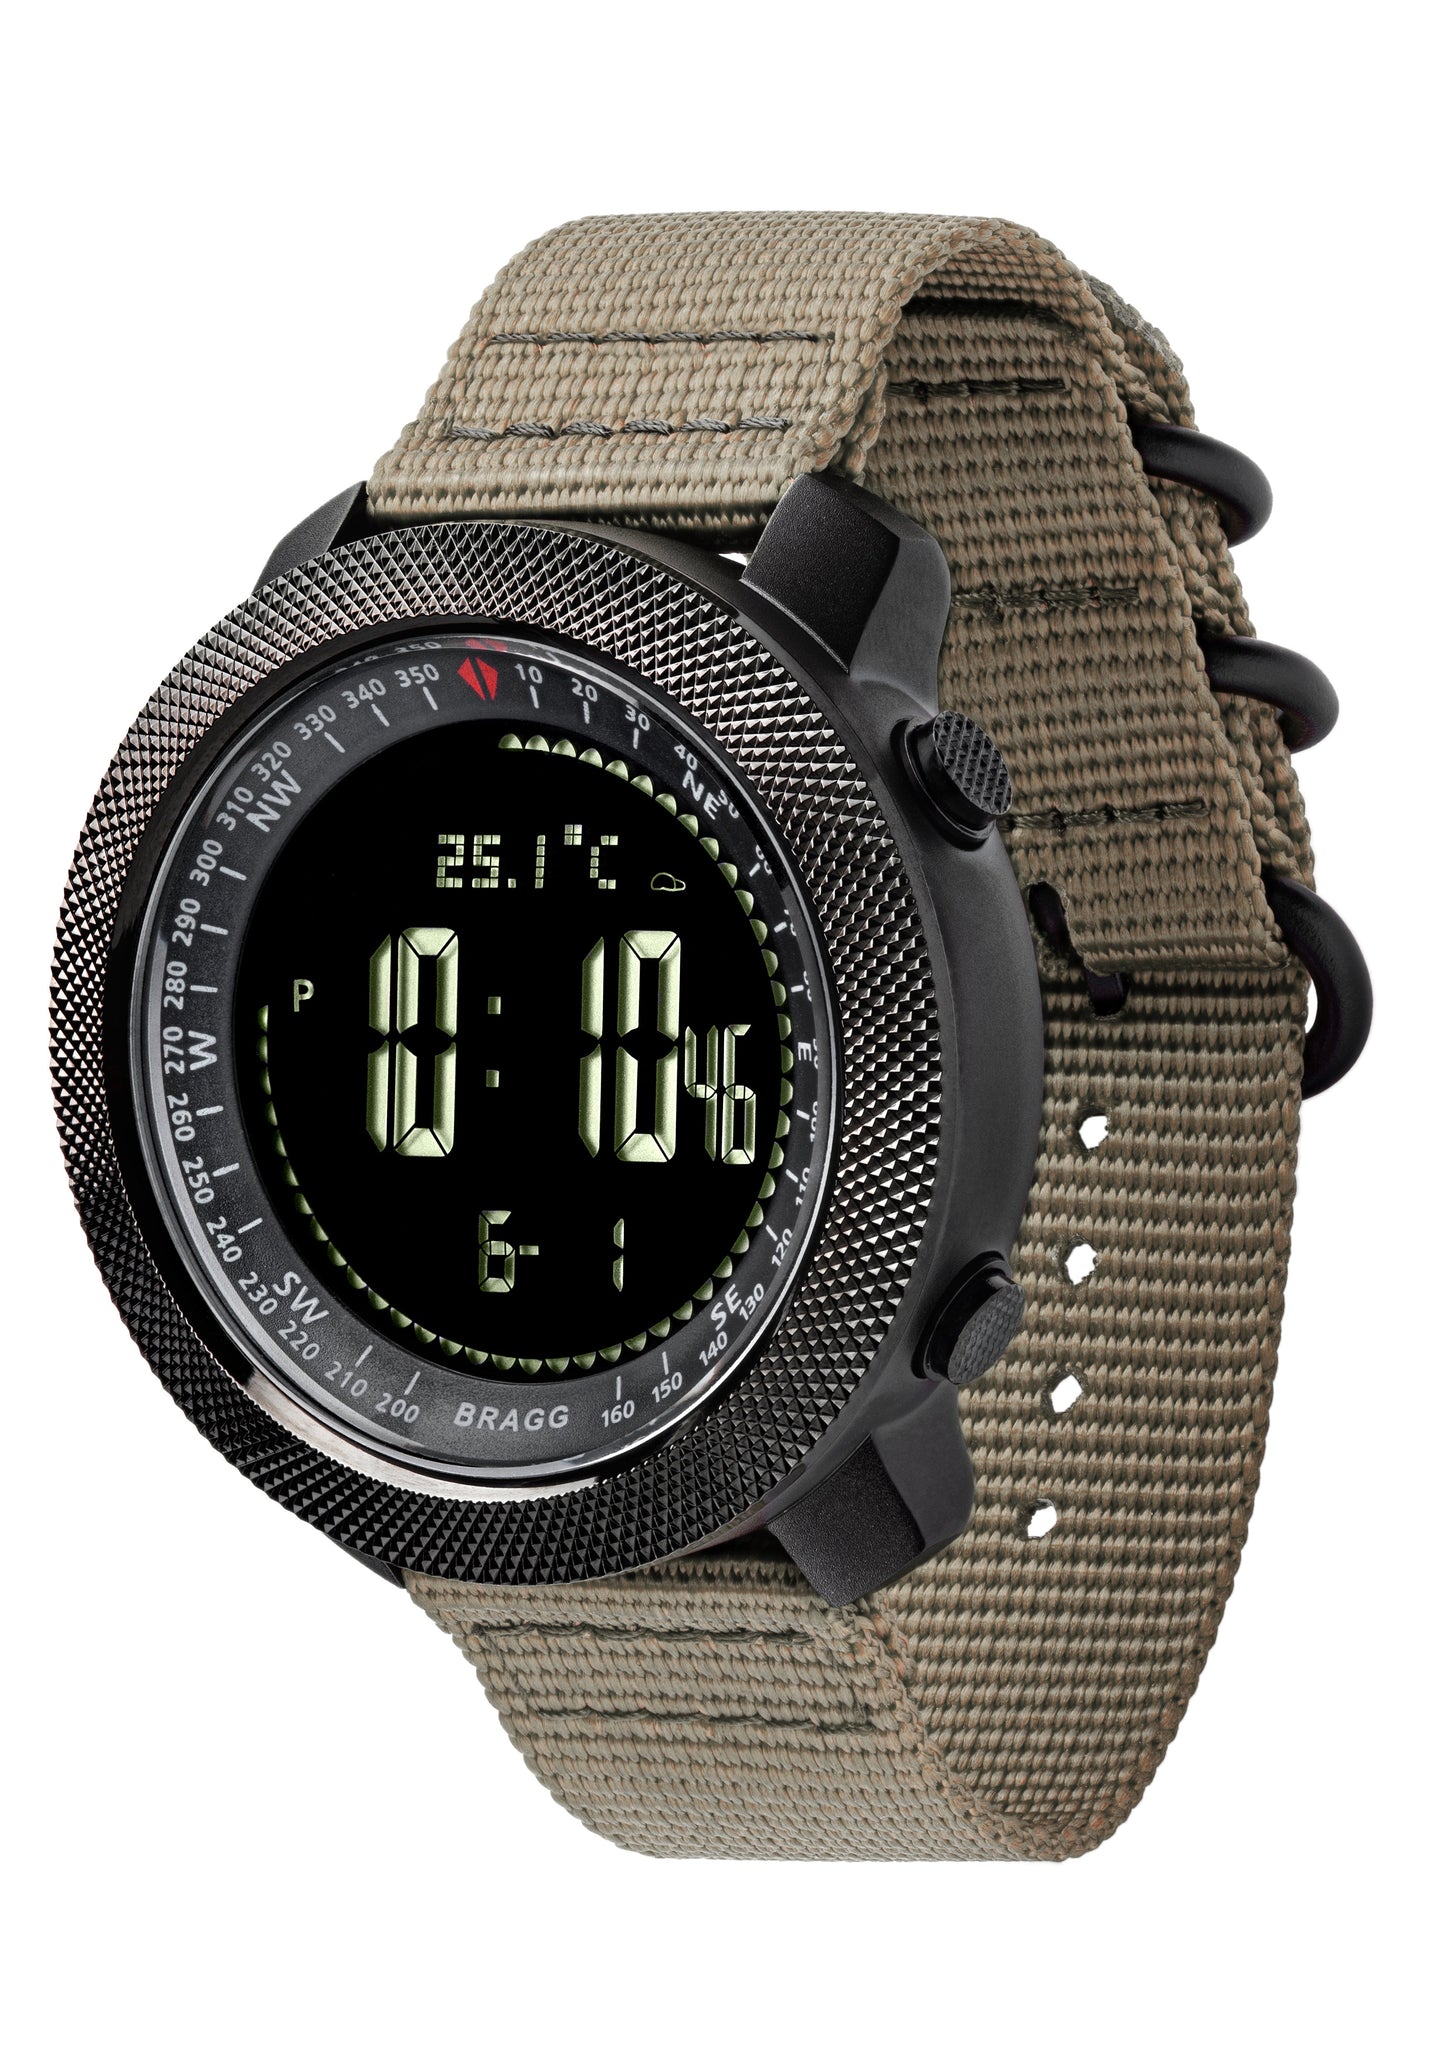 Bragg Black Ops Chrono watch with Olive Nato Band Military Sports Digital Watch Bragg Watch 